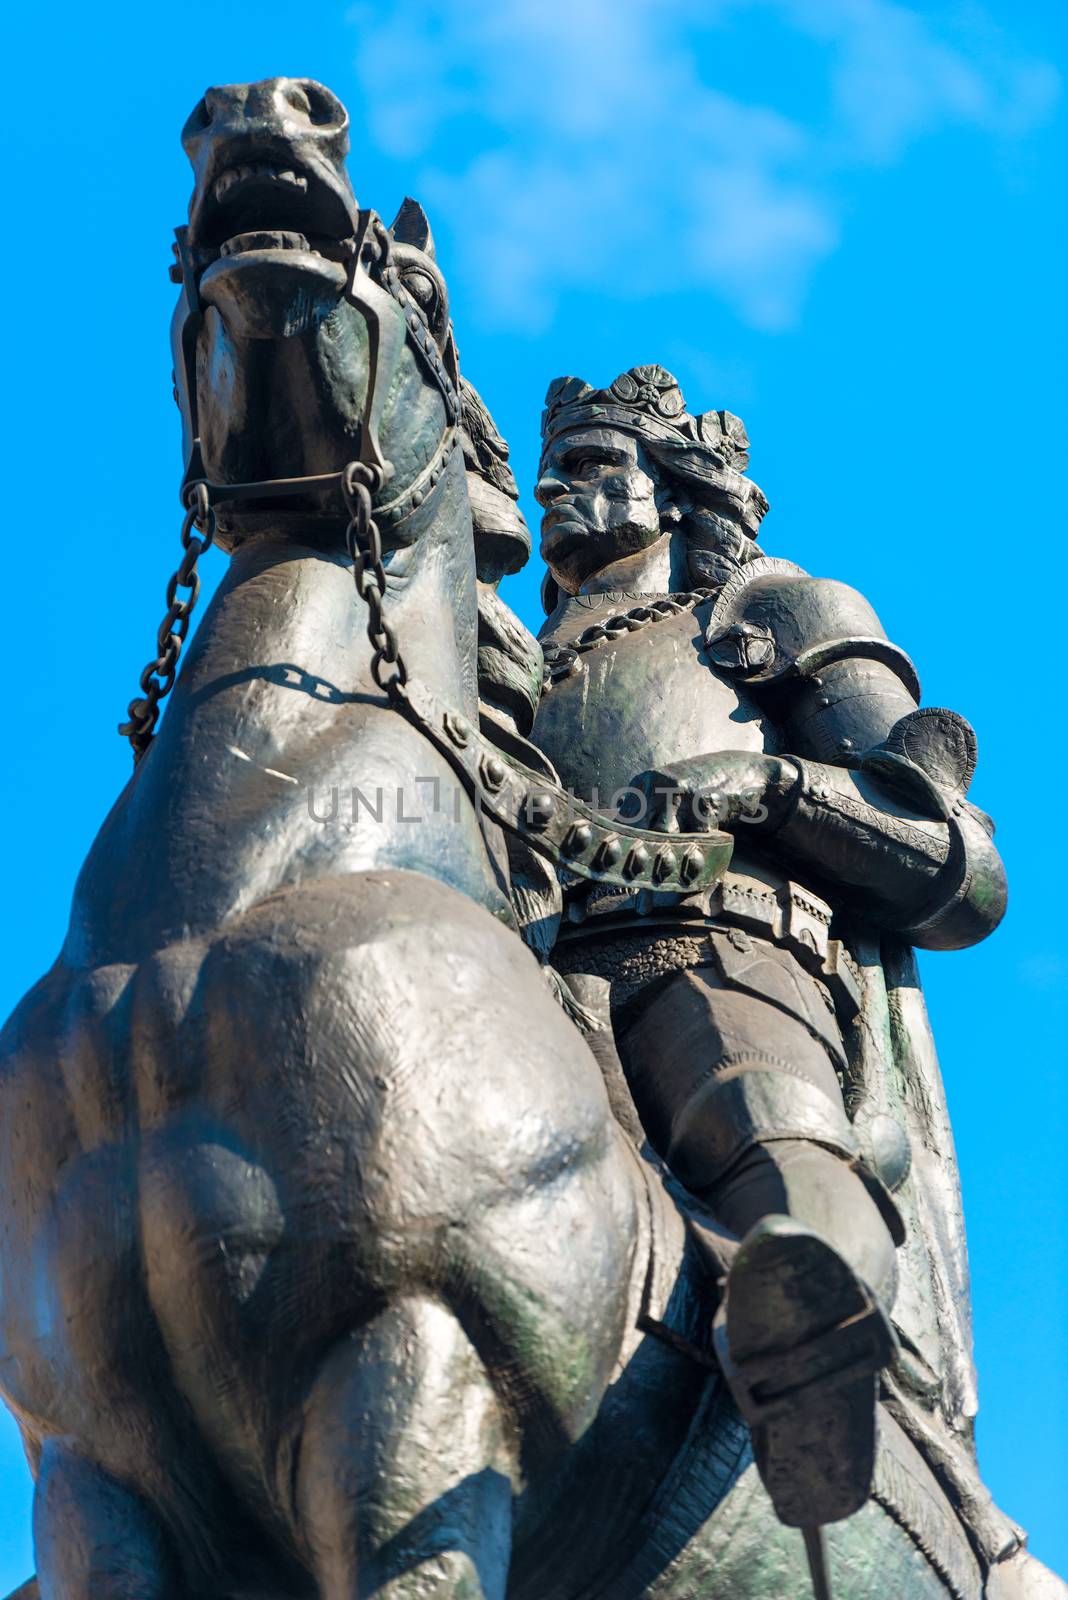 close-up Grunwald on horseback - a monument in Krakow